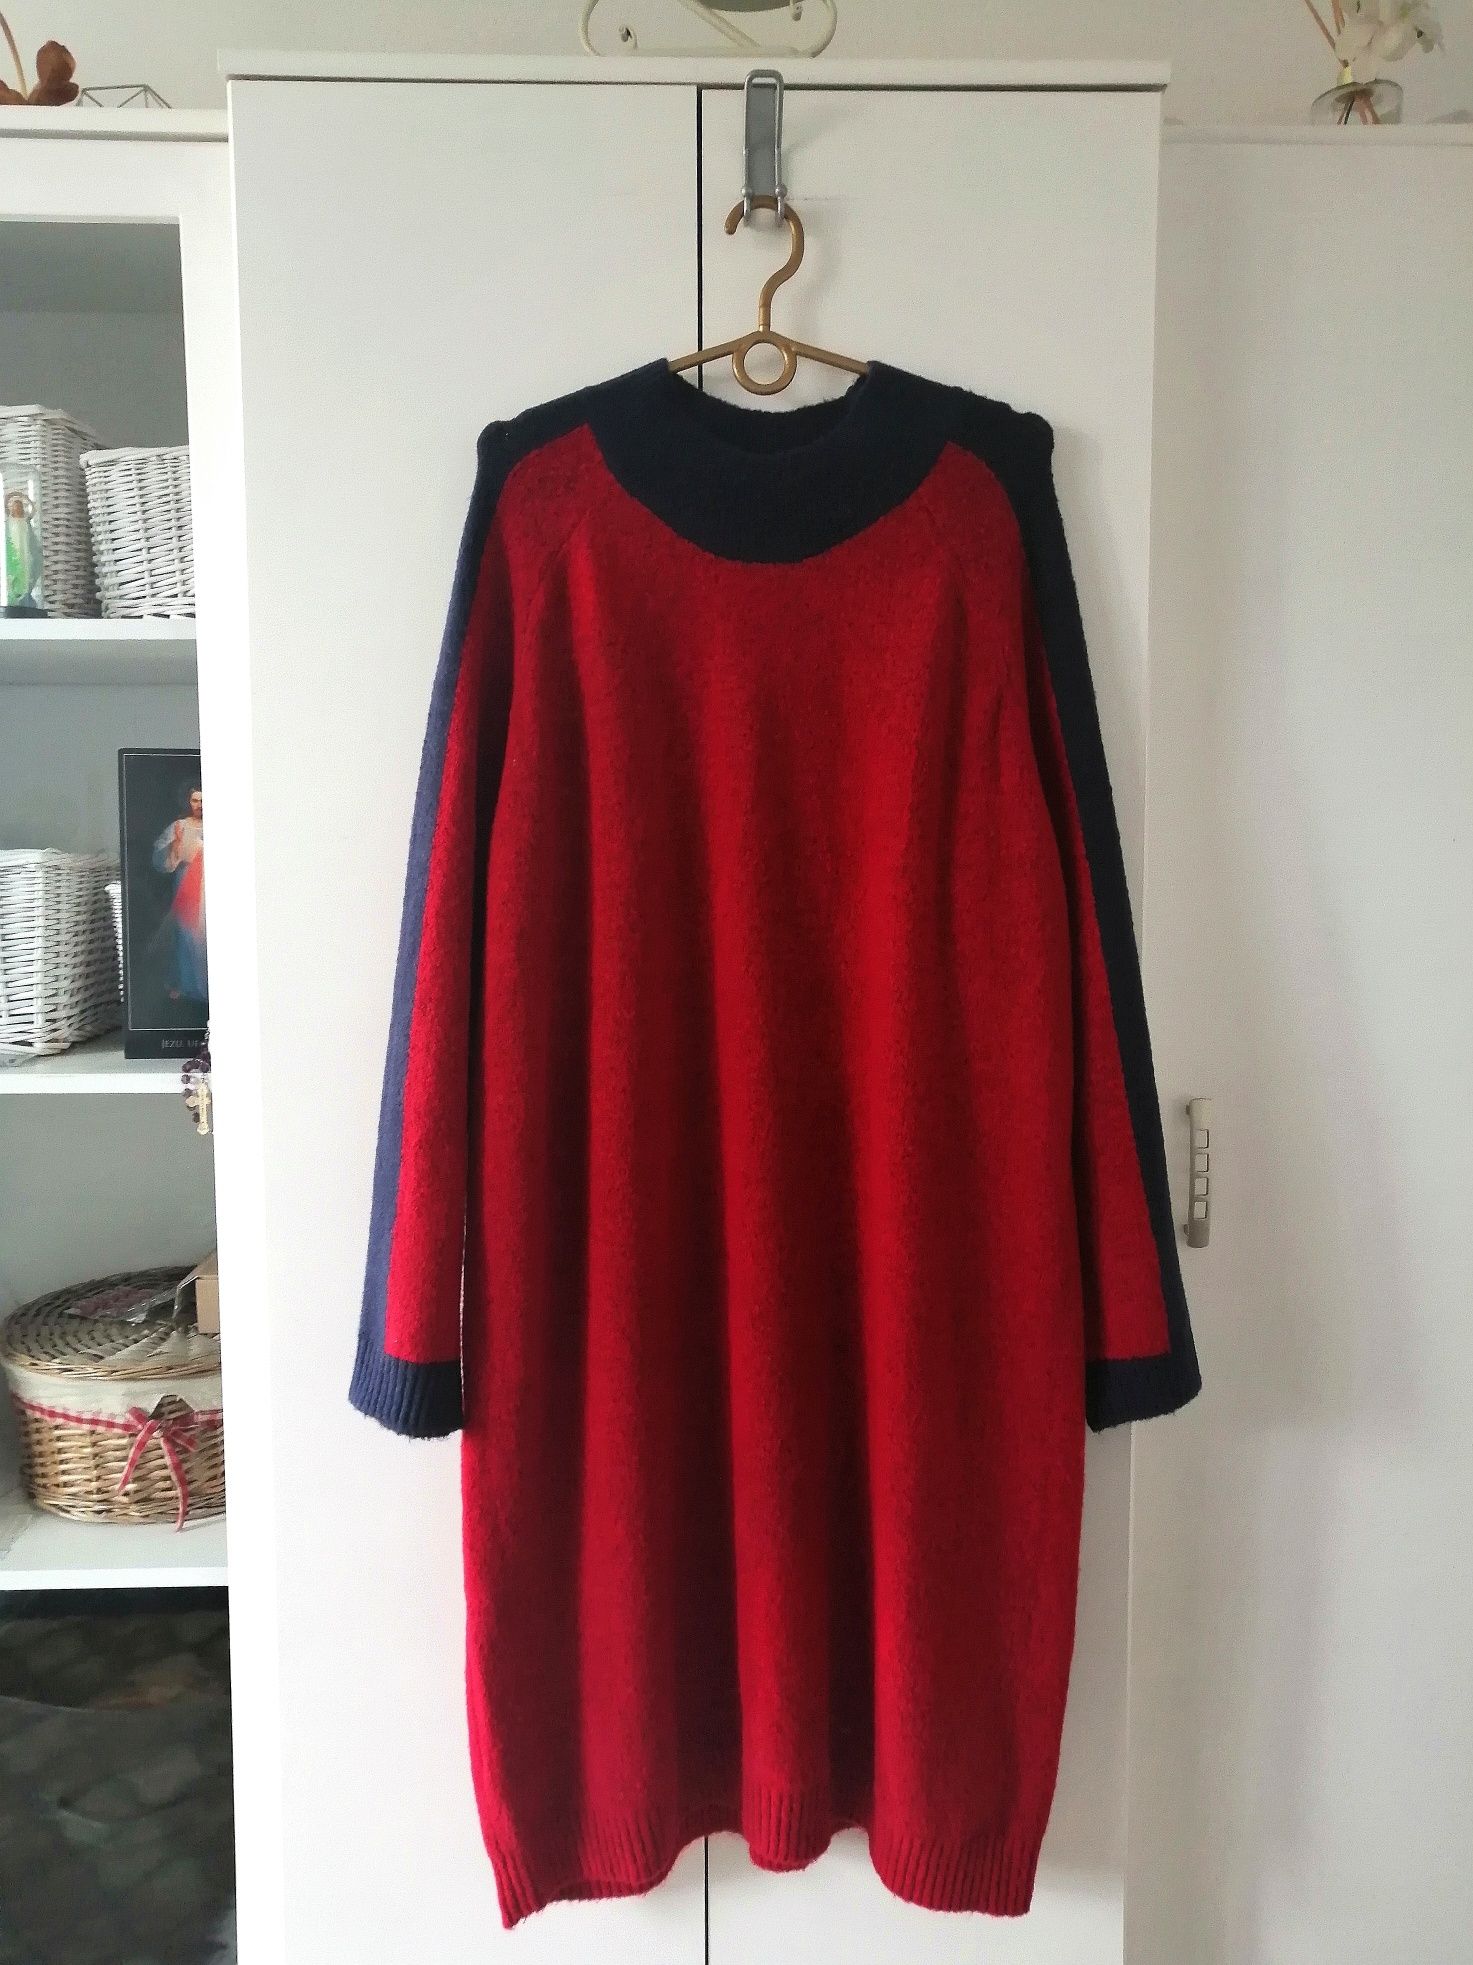 Sukienka sweterkowa czerwono grataowa jak Tommy Hilfiger 48/50